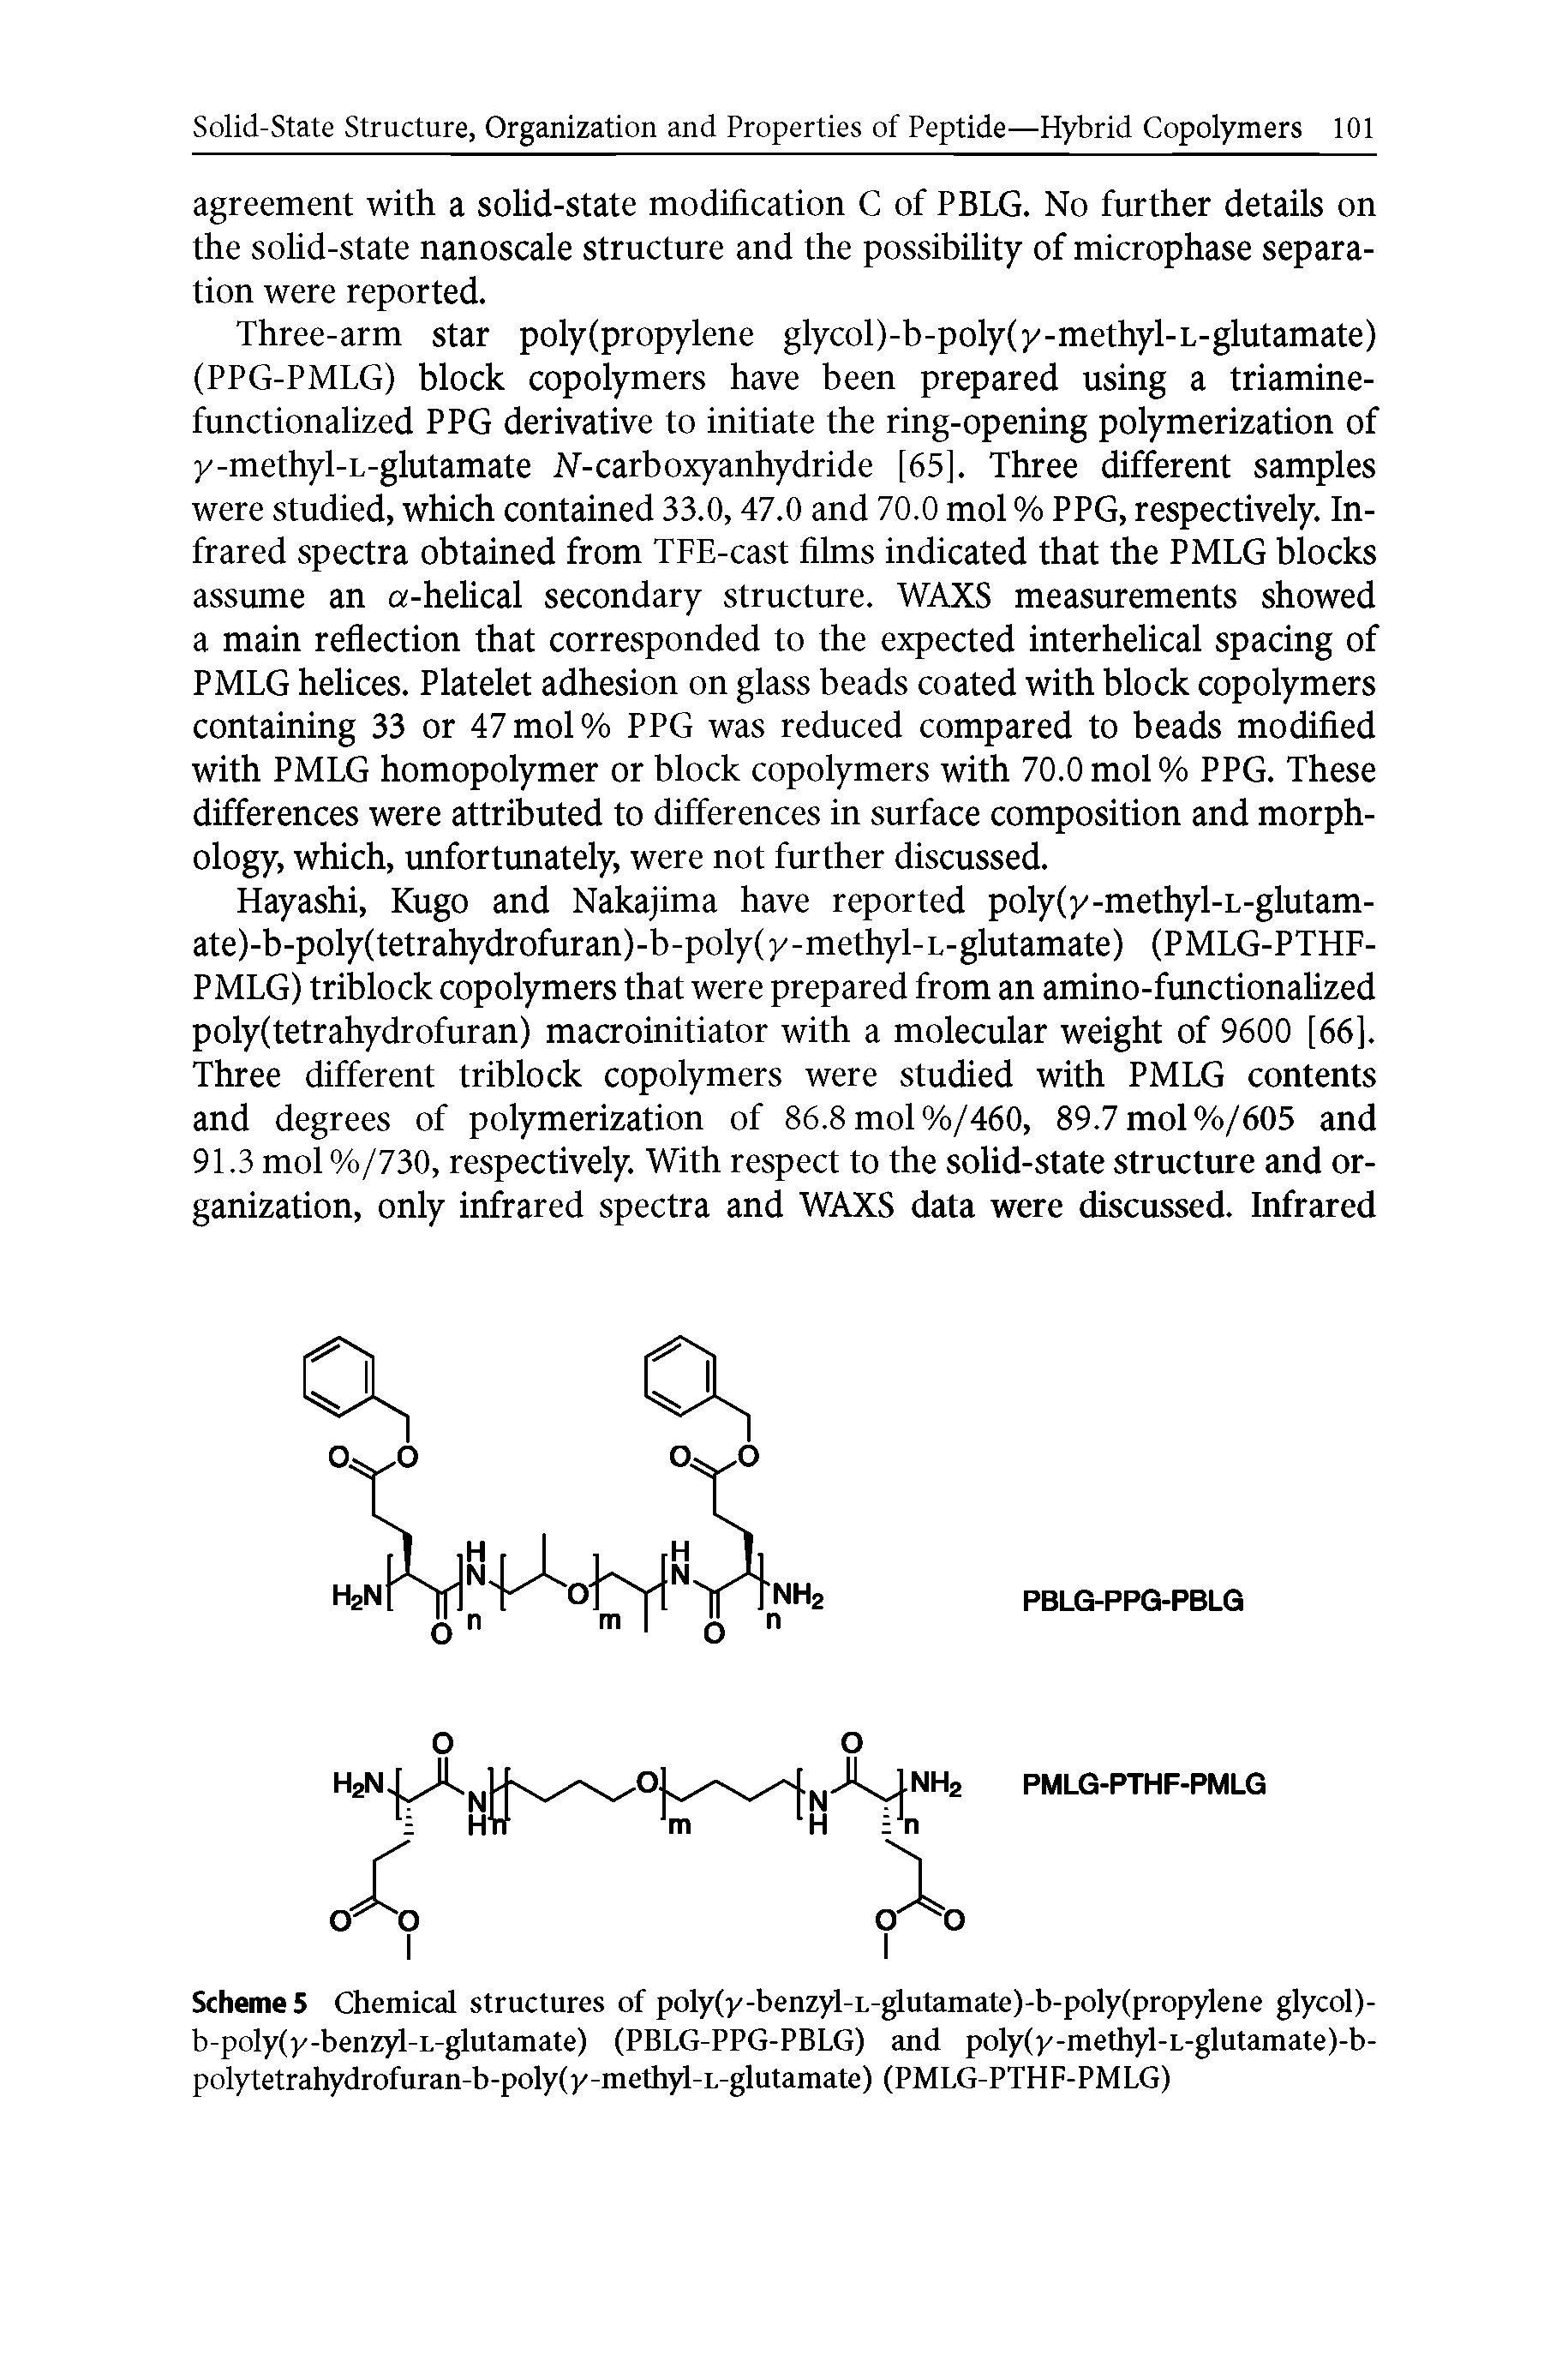 Scheme 5 Chemical structures of poly(y-benzyl-L-glutamate)-b-poly(propylene glycol)-b-poly(y-benzyl-L-glutamate) (PBLG-PPG-PBLG) and poly(y-methyl-L-glutamate)-b-polytetrahydrofuran-b-poly(y-methyl-L-glutamate) (PMLG-PTHF-PMLG)...